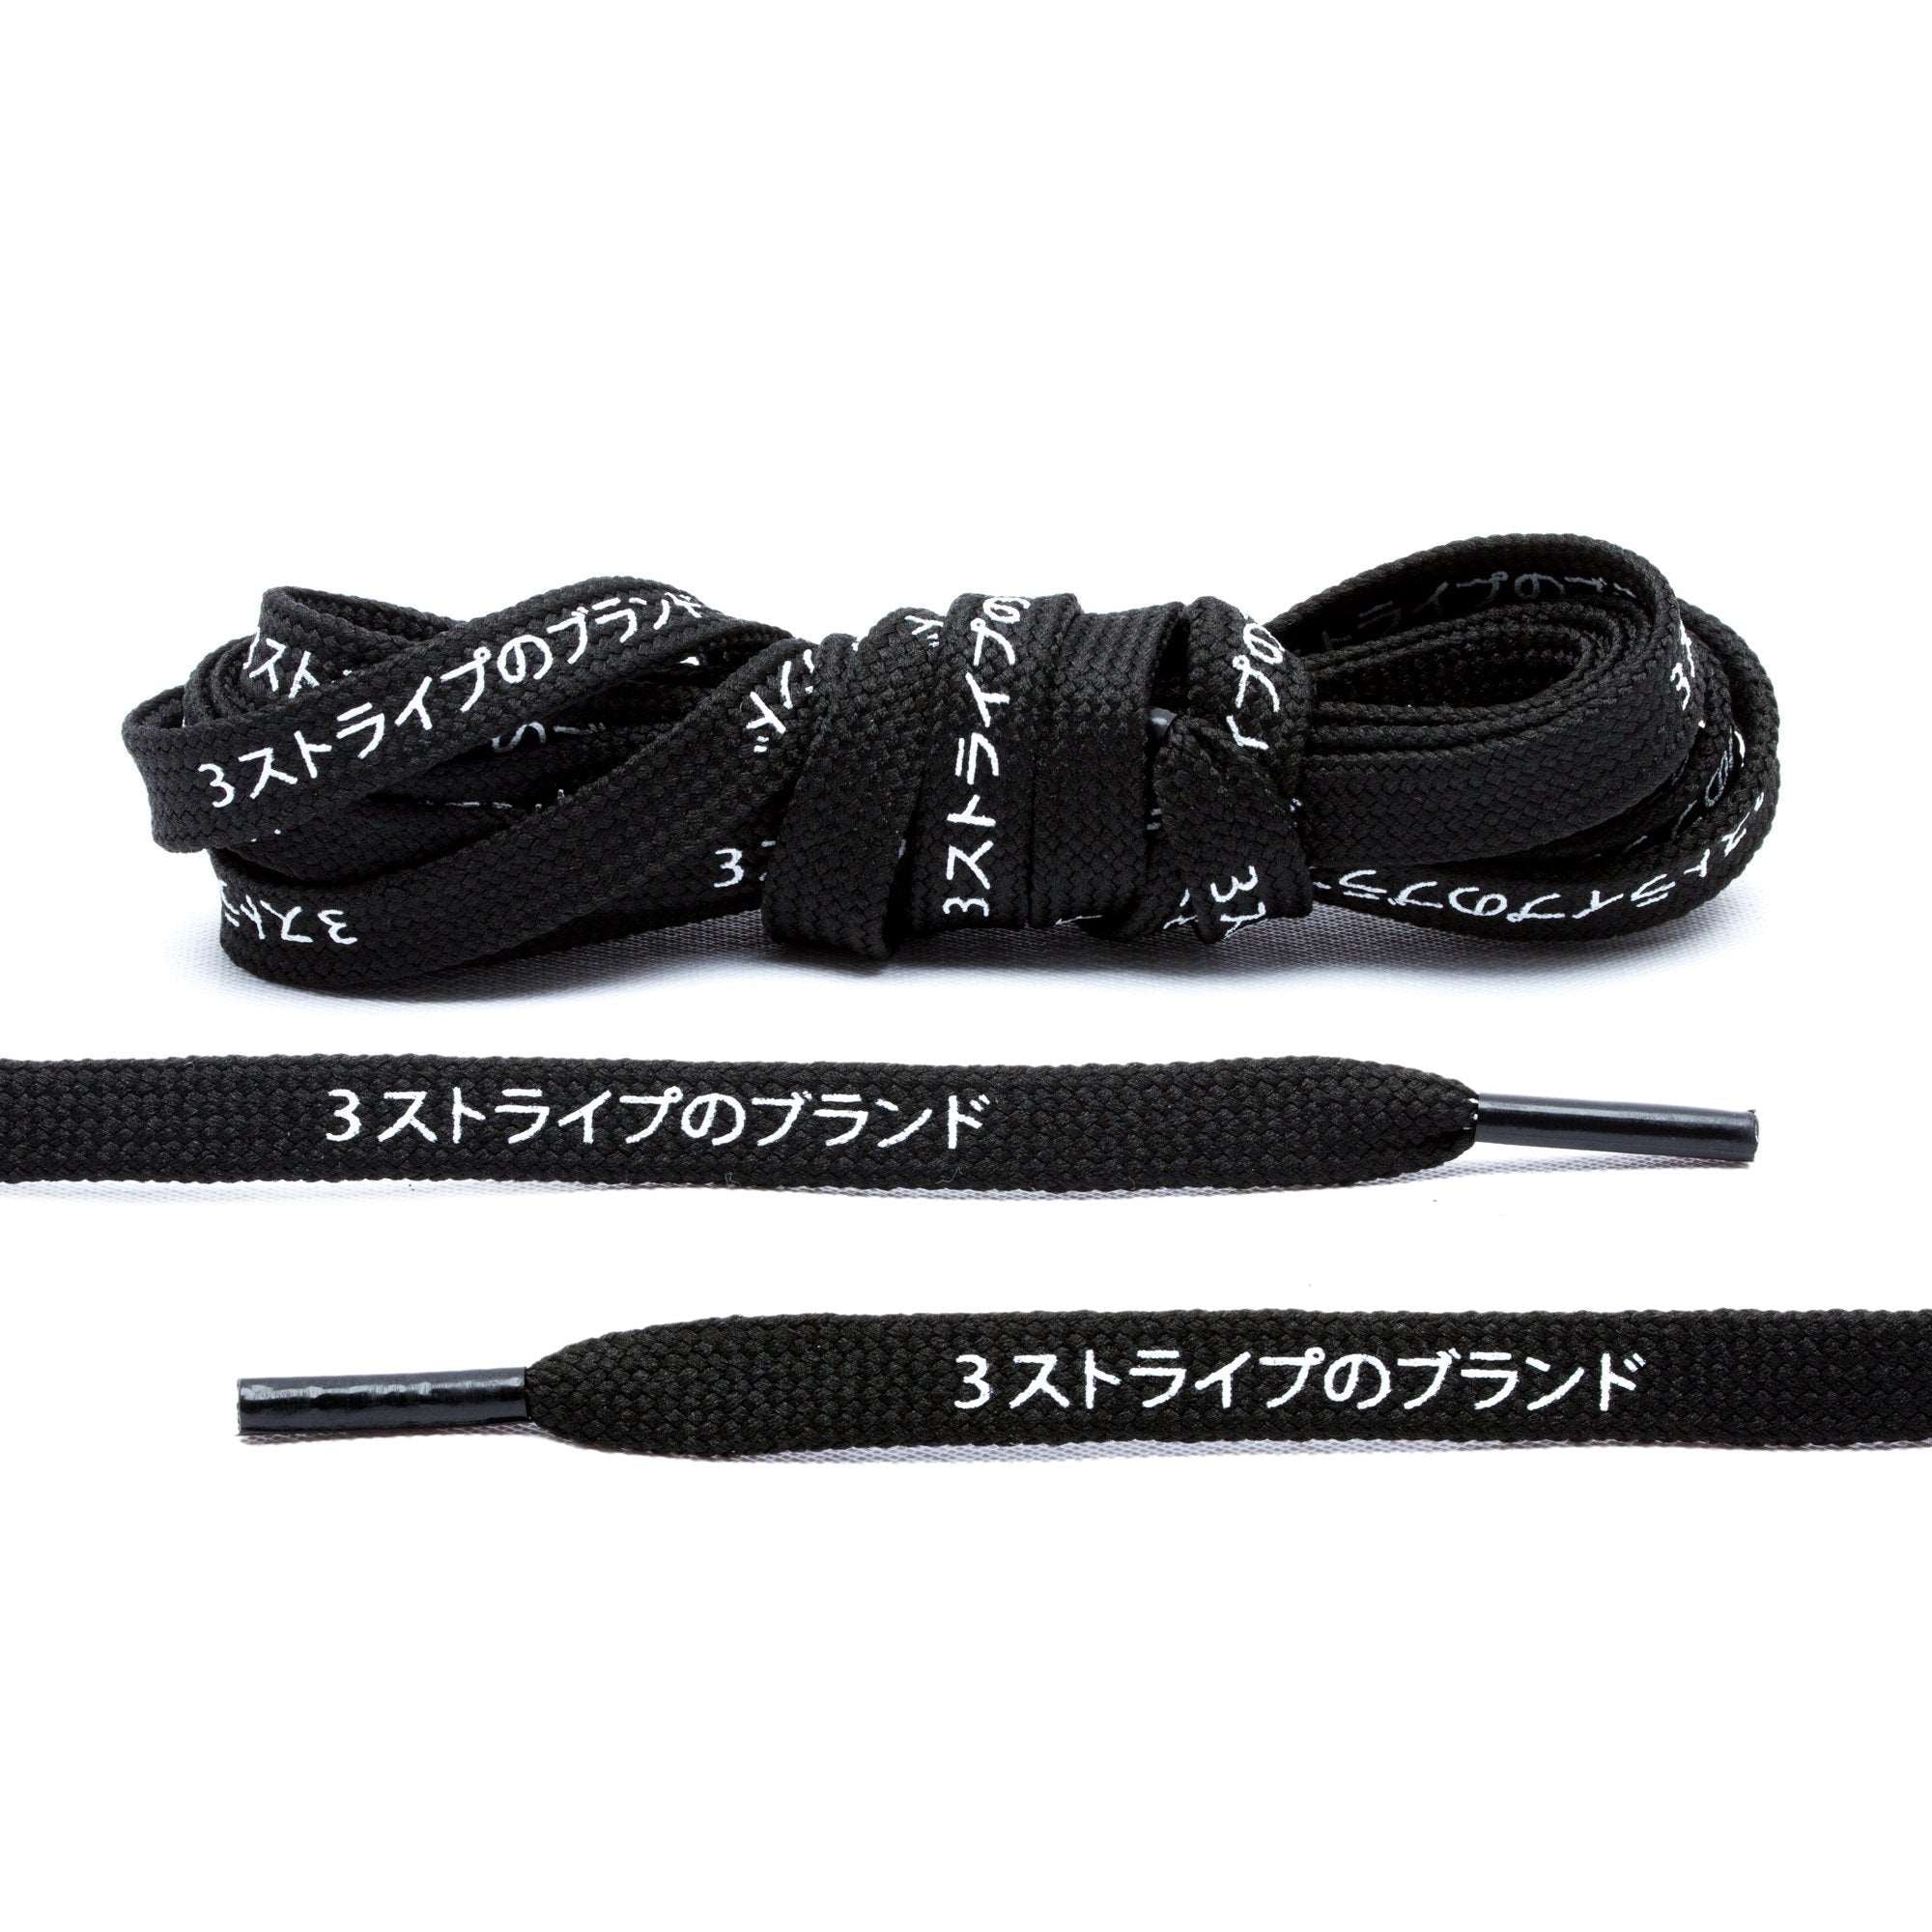 Black Katakana Shoe Laces | Shoe